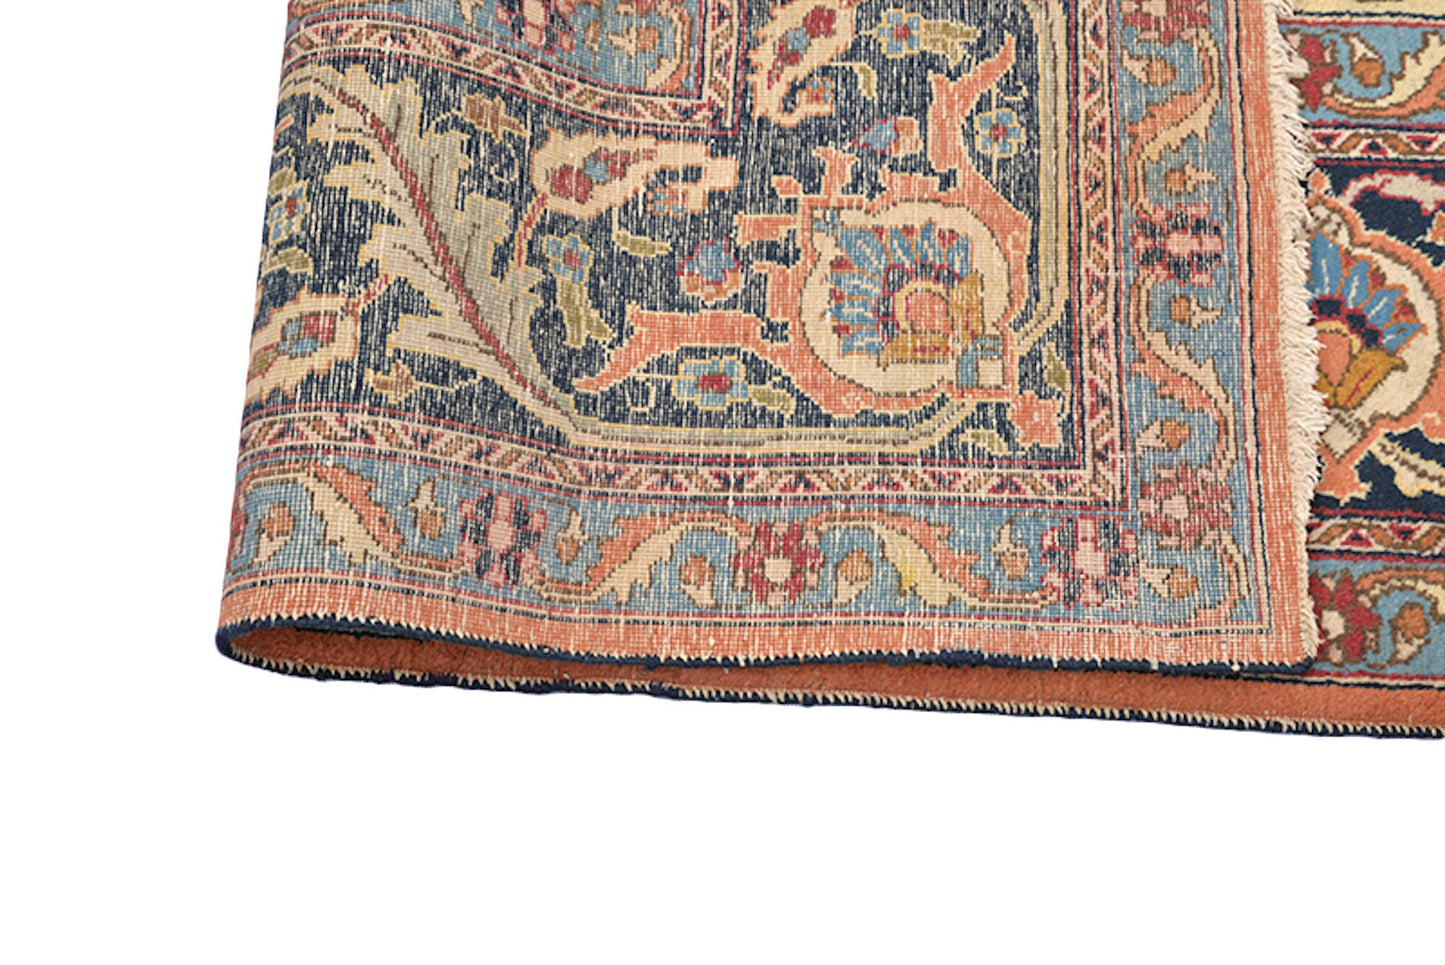 11 x 8 Feet Orange Blue Colorful Rug | Handmade Area Rug | Oriental Persian Antique Rug | Wool Tribal Vintage